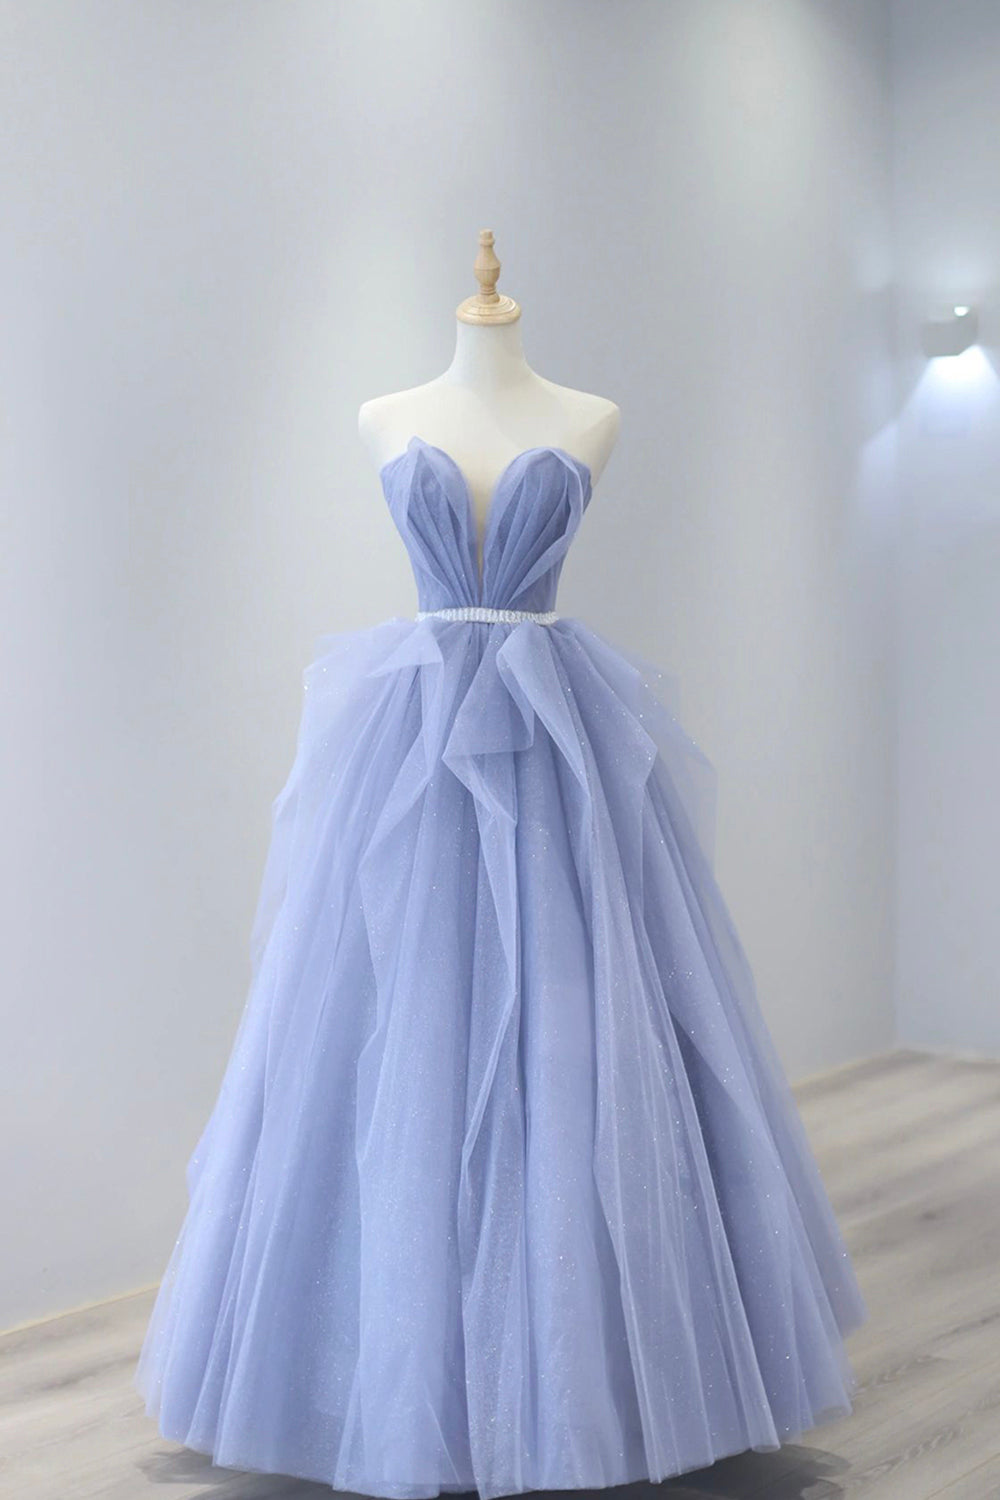 Blue Strapless Tulle Long Prom Dress Outfits For Girls, Lovely Sweetheart Neckline Evening Dress